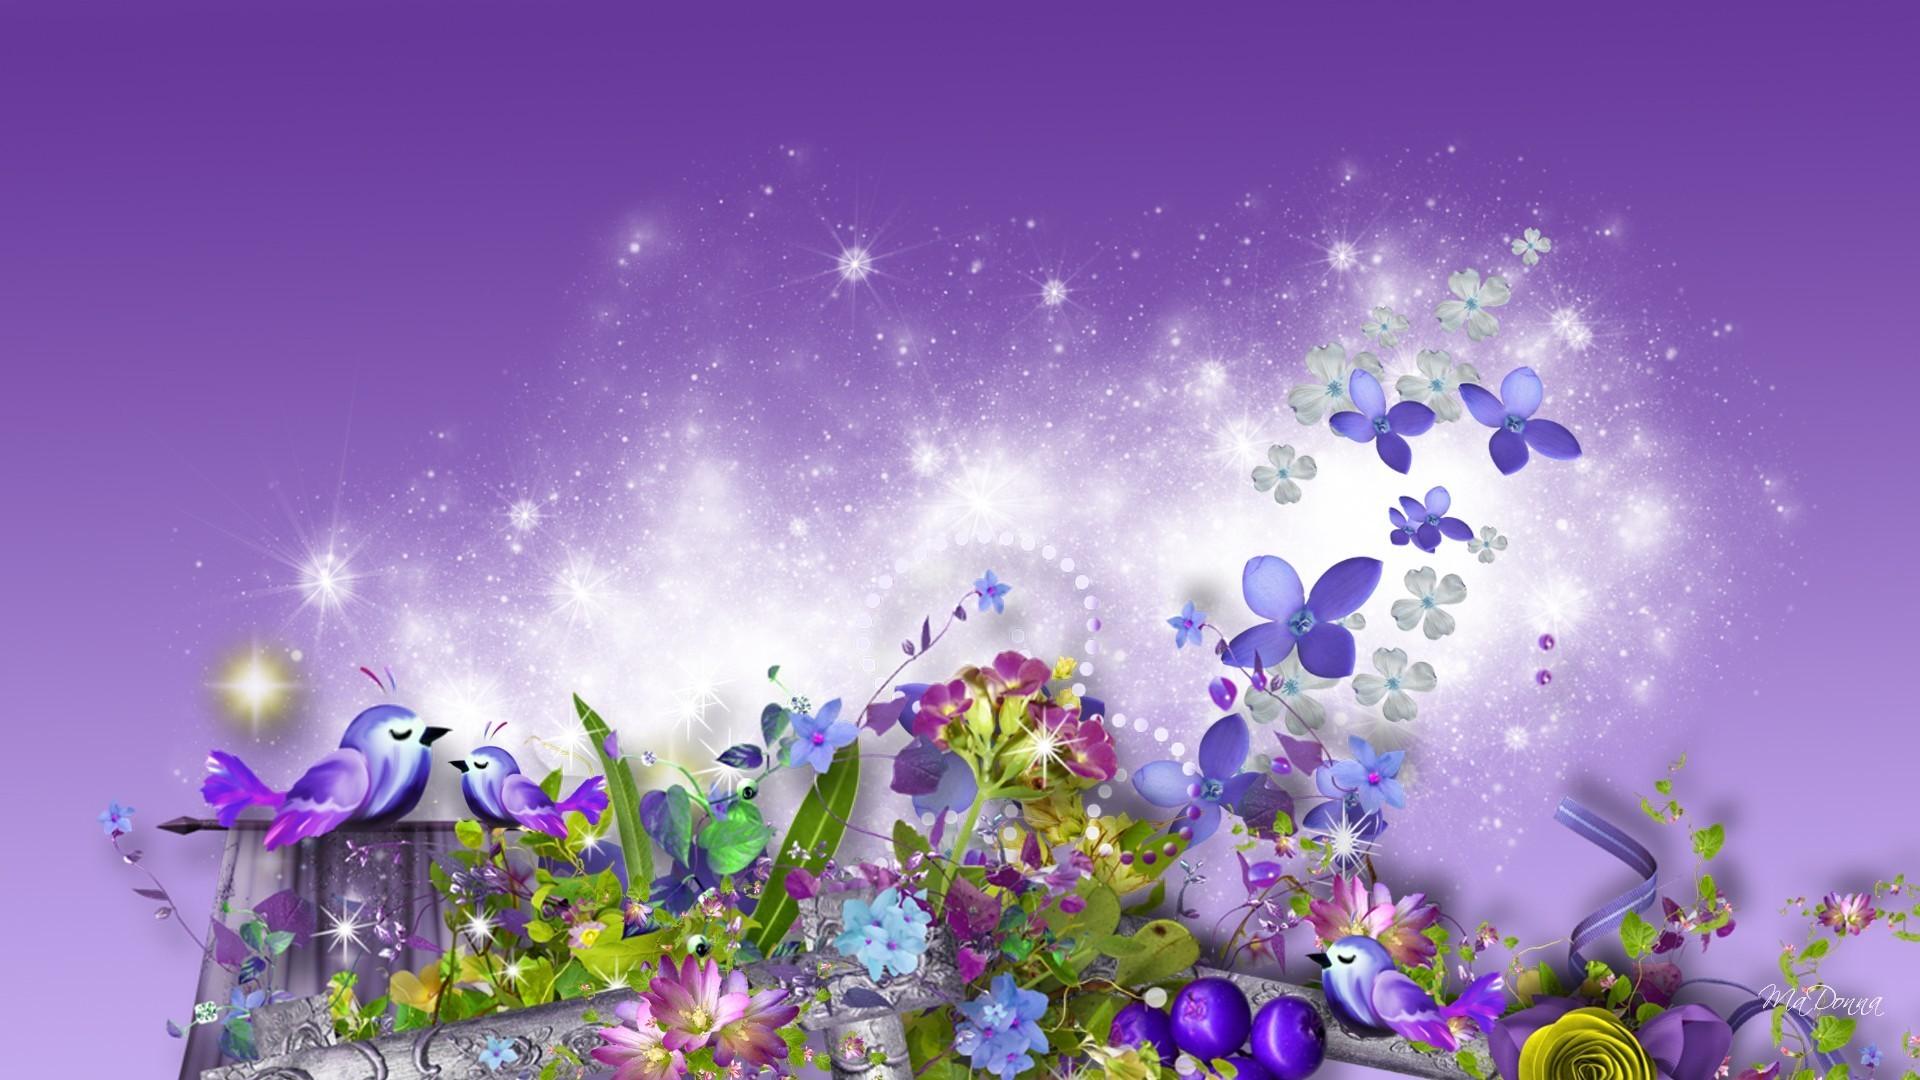 Lavender summer dreams wallpaper. PC